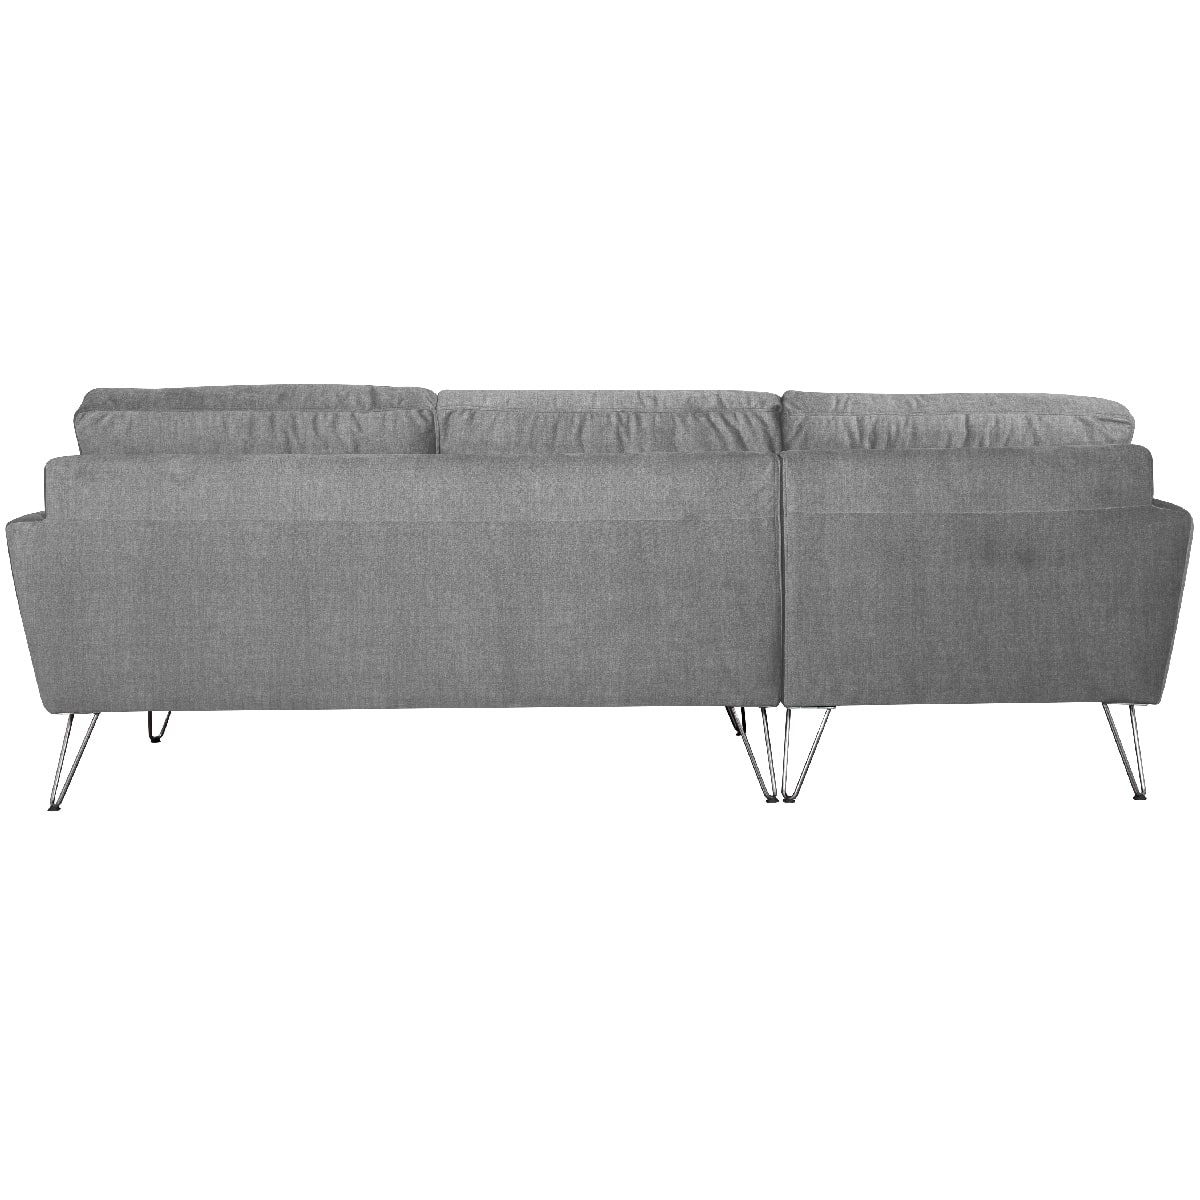 Canapé d'angle dos gris